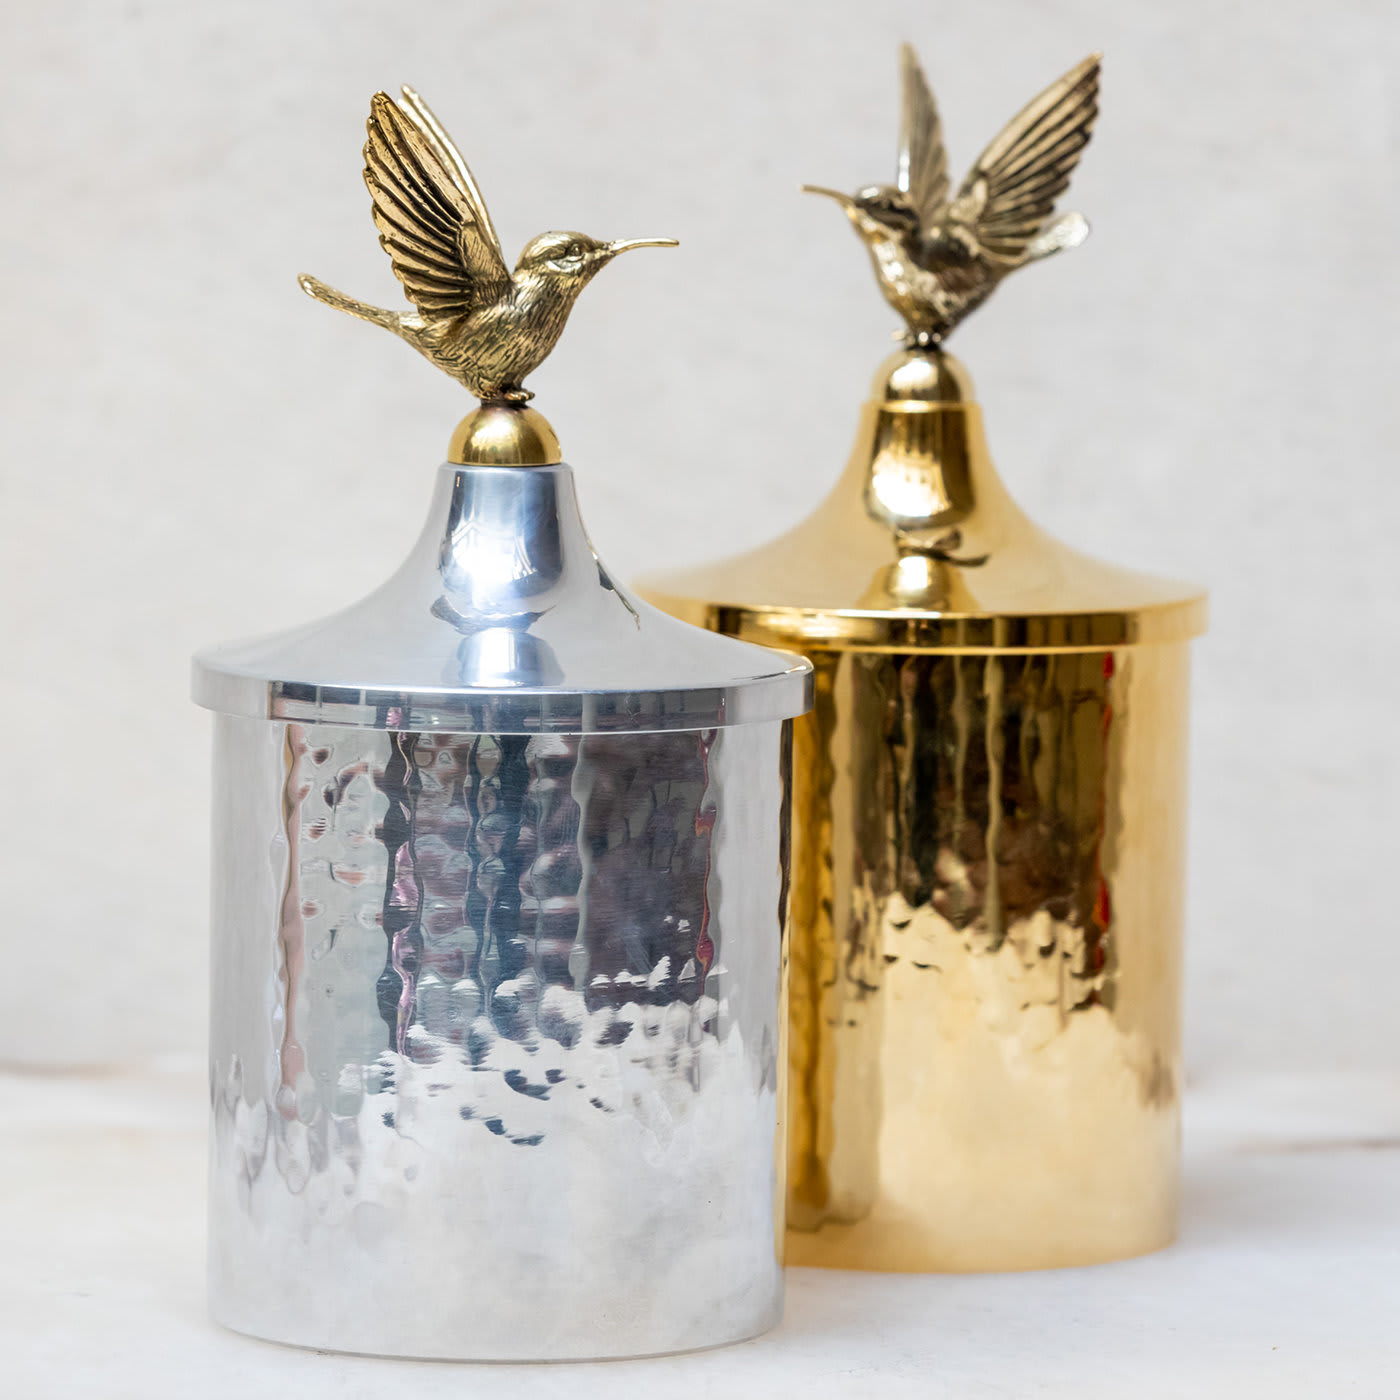 Hummingbird Container in Silver - Nicola Falcone x Aquaflor